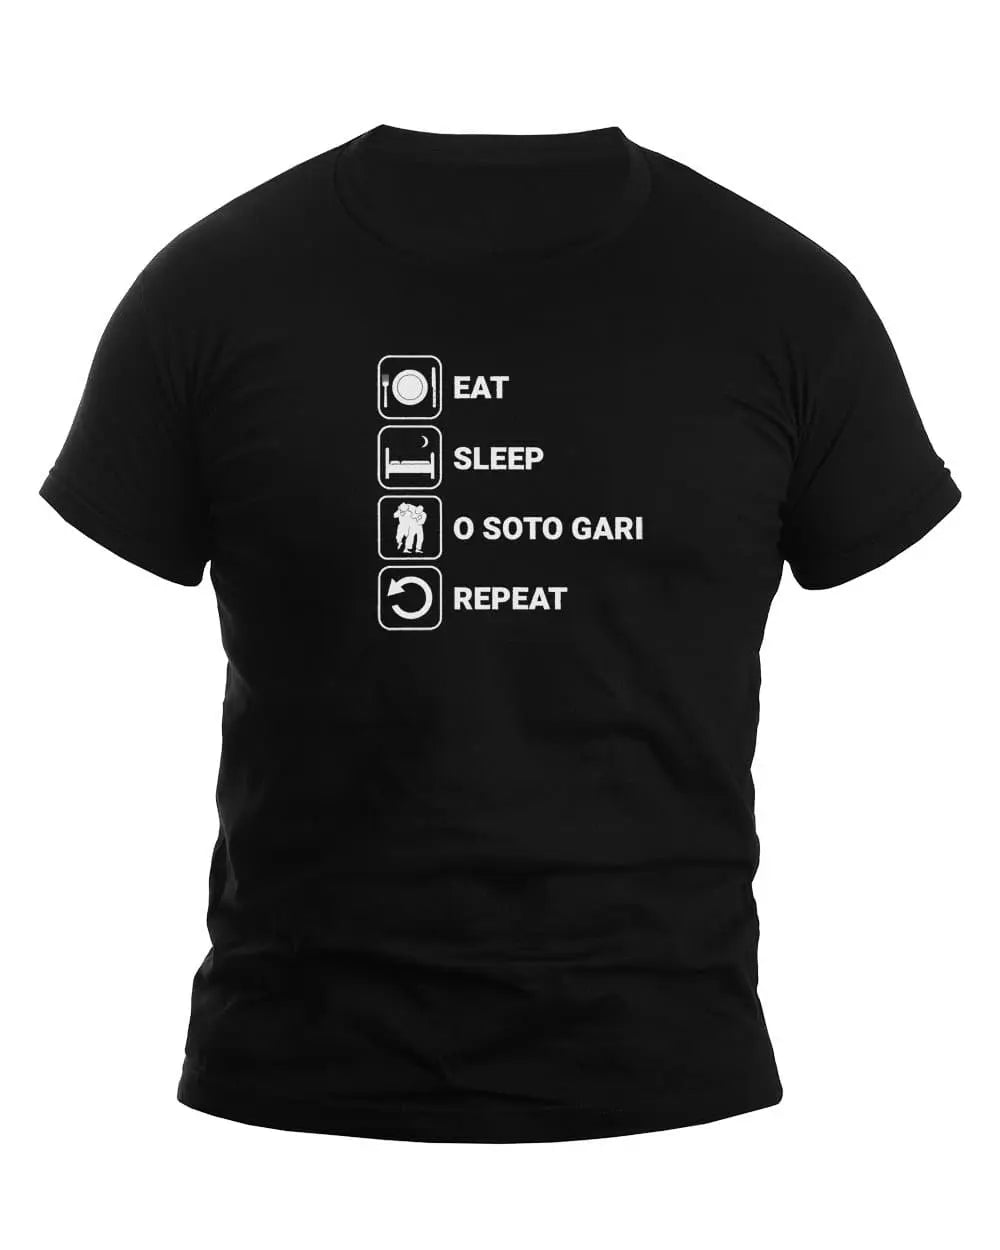 Eat Sleep O Soto Gari Repeat Judo T-Shirt - JudoShop.com